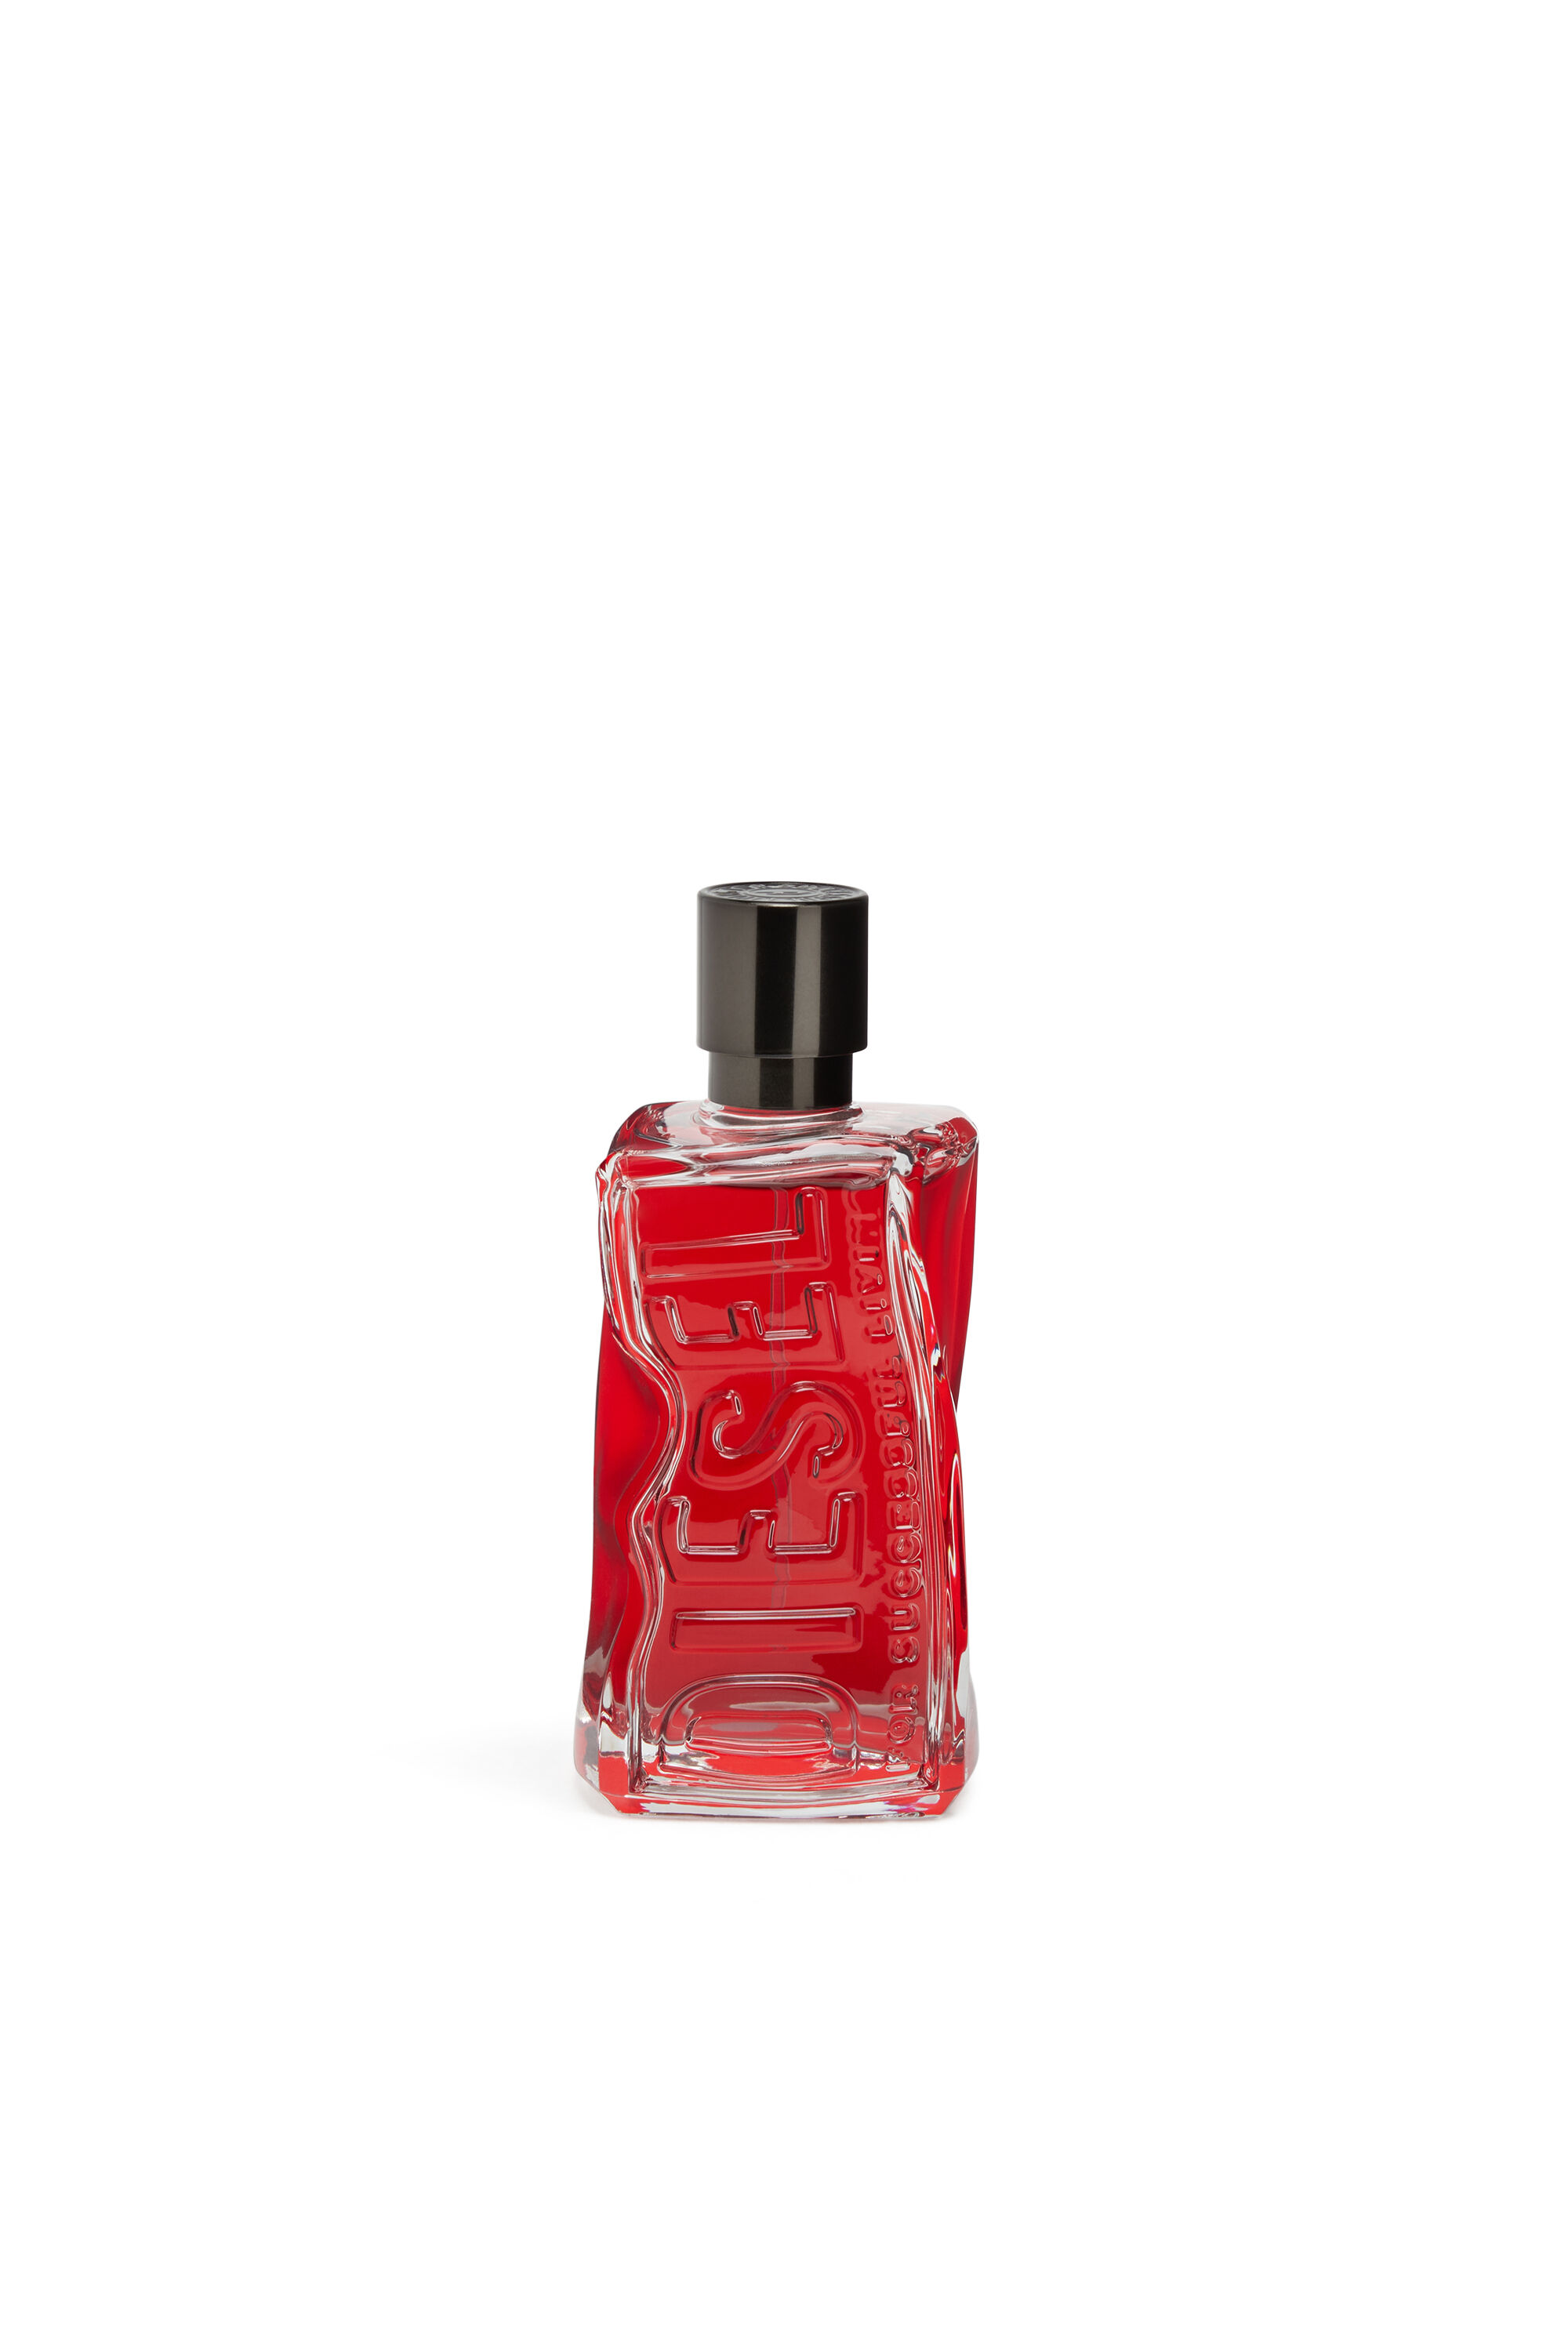 Diesel - D RED 50 ML, Uomo D RED 50ml, Eau de Parfum in Rosso - Image 1